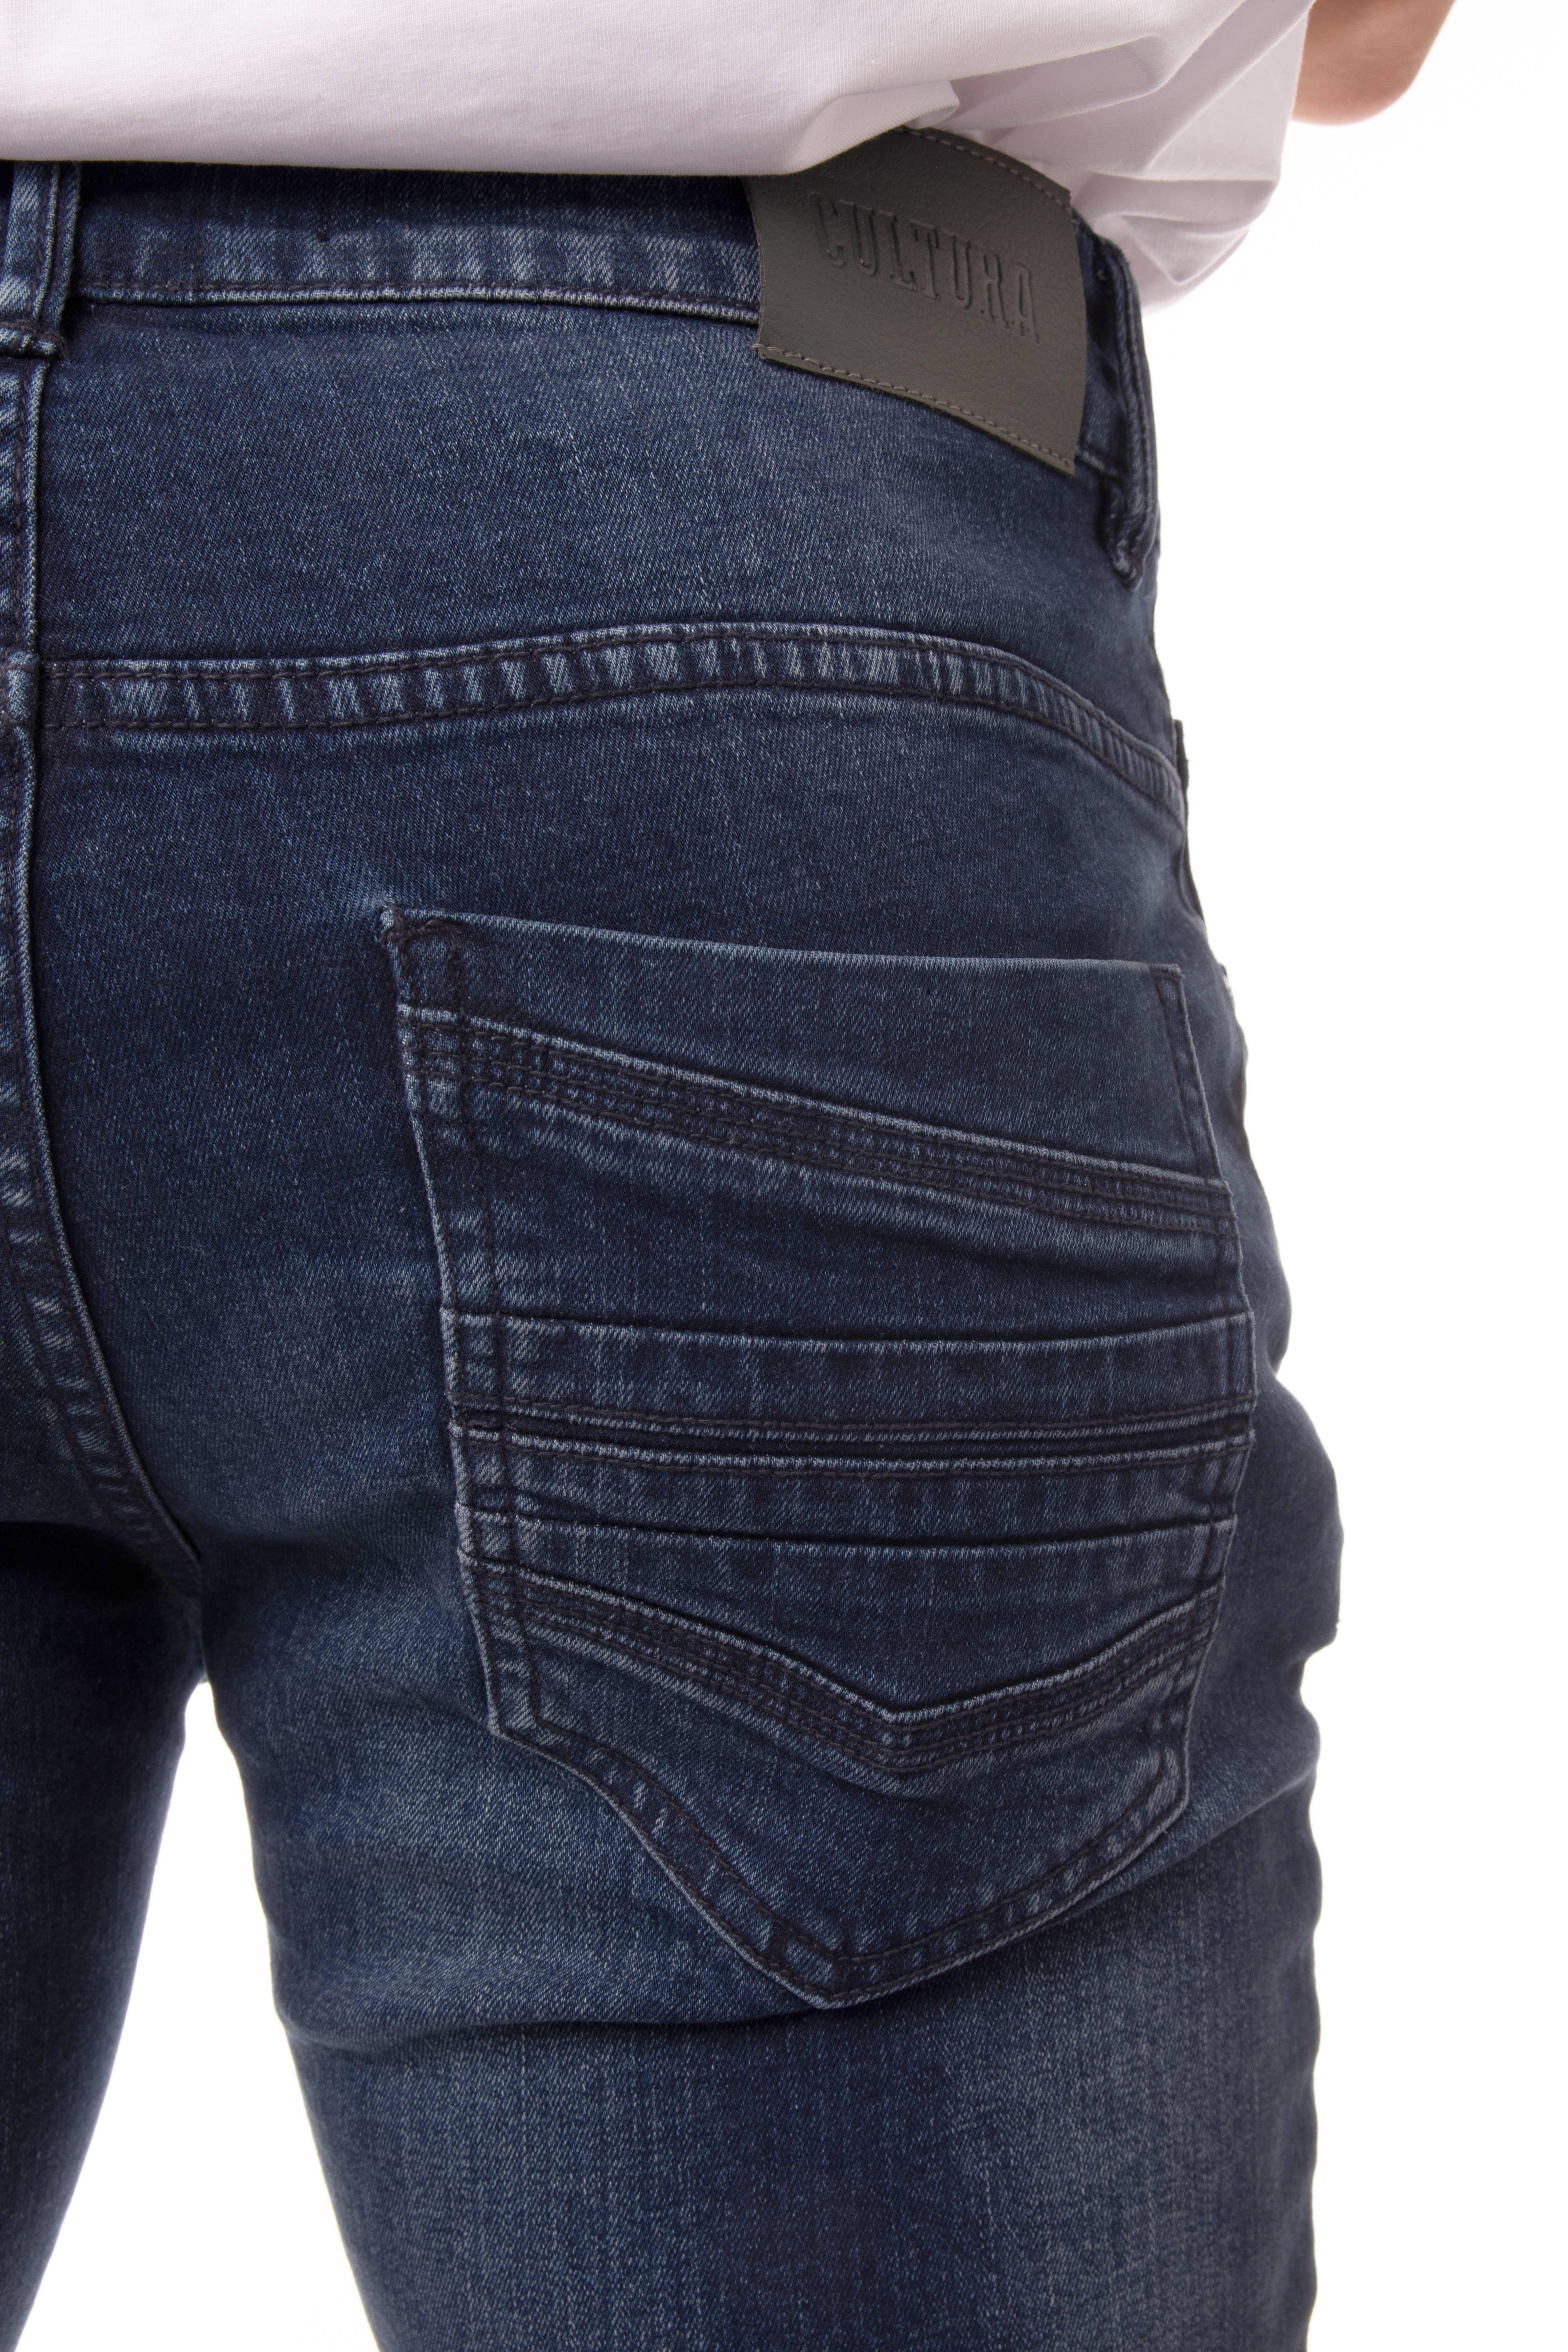 CULTURA Men's Washed Distressed Fashion Denim Flex Comfort Slim Relaxed Skinny Fit Tapered Leg - Walmart.com